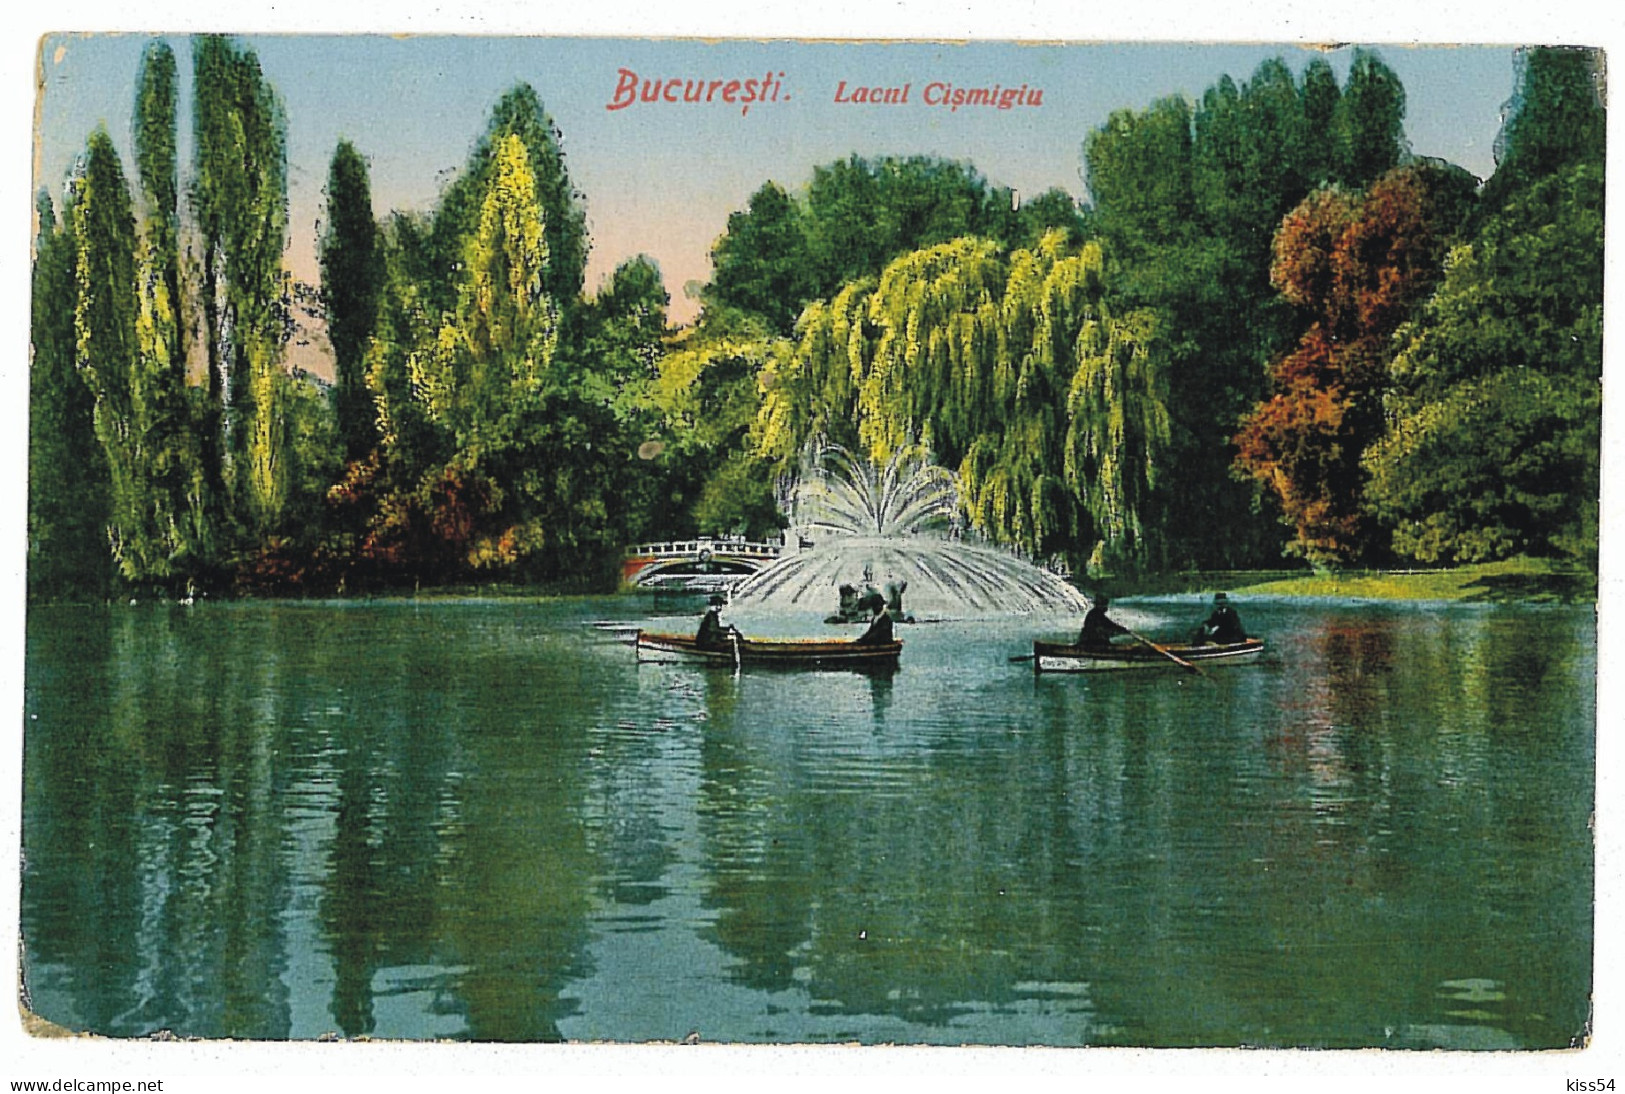 RO 52 - 1731 BUCURESTI, Lake Cismigiu, Romania - Old Postcard - Used - 1931 - Rumania